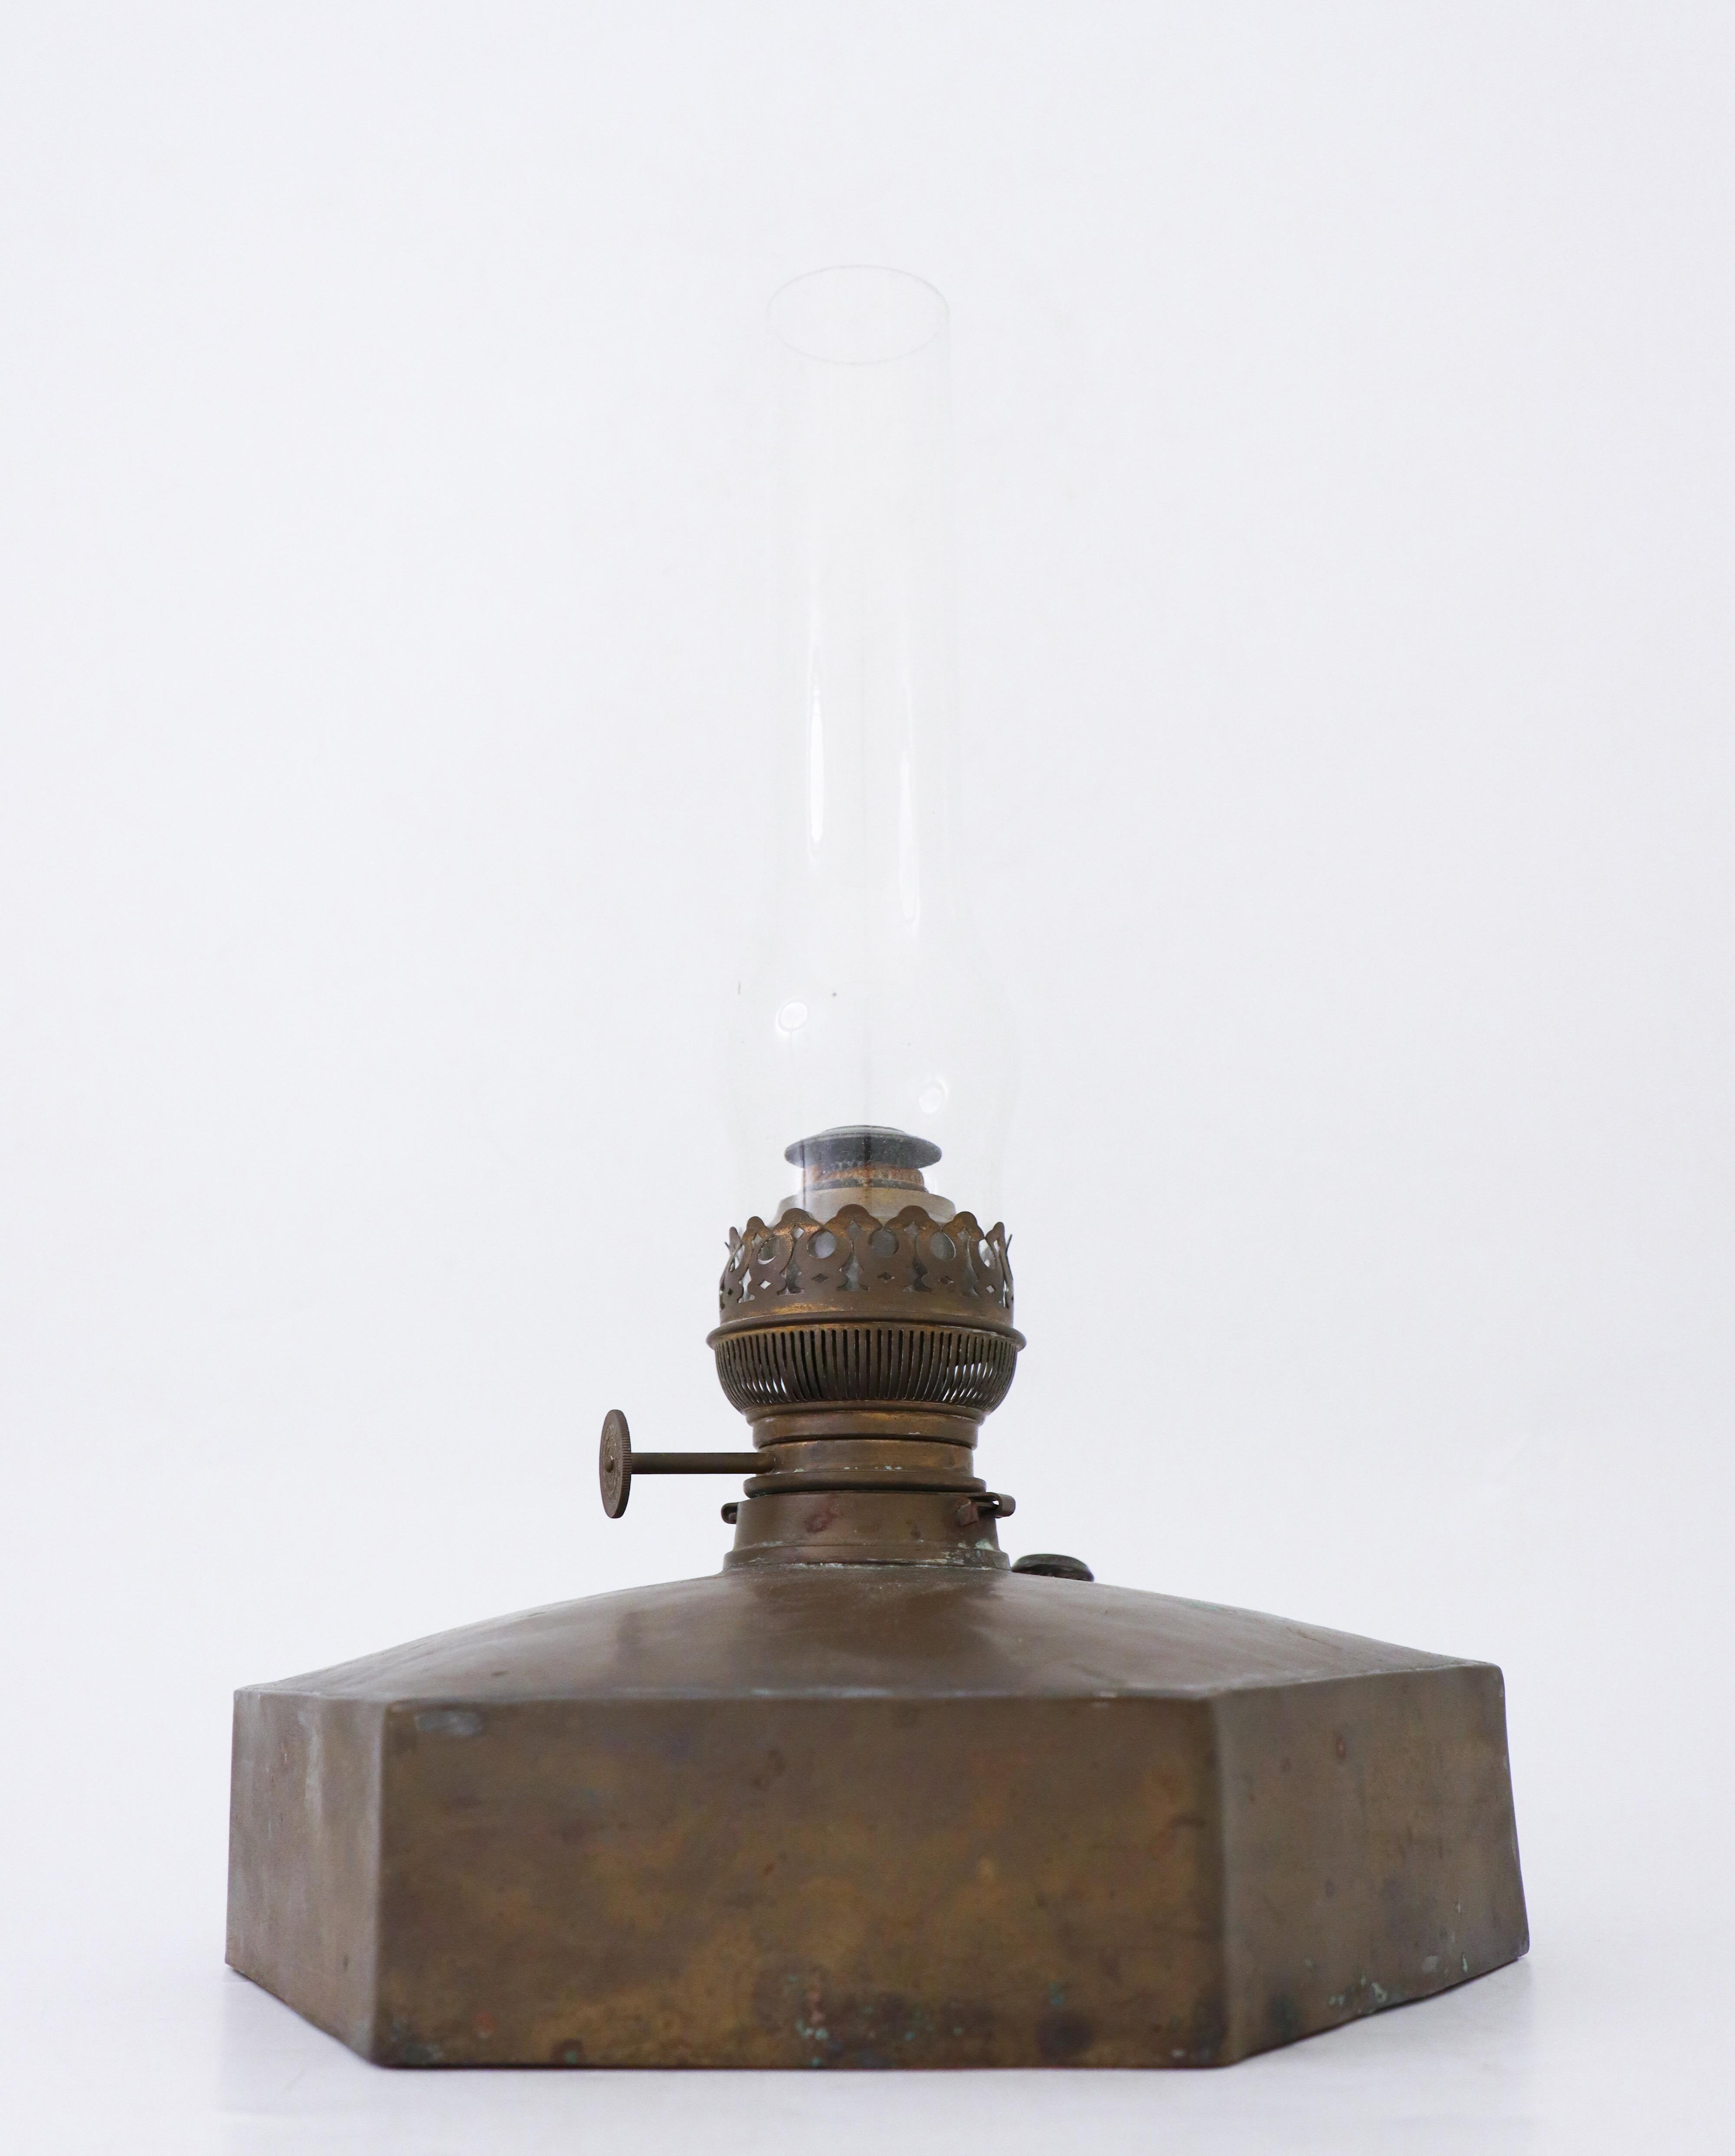 oil lamp history